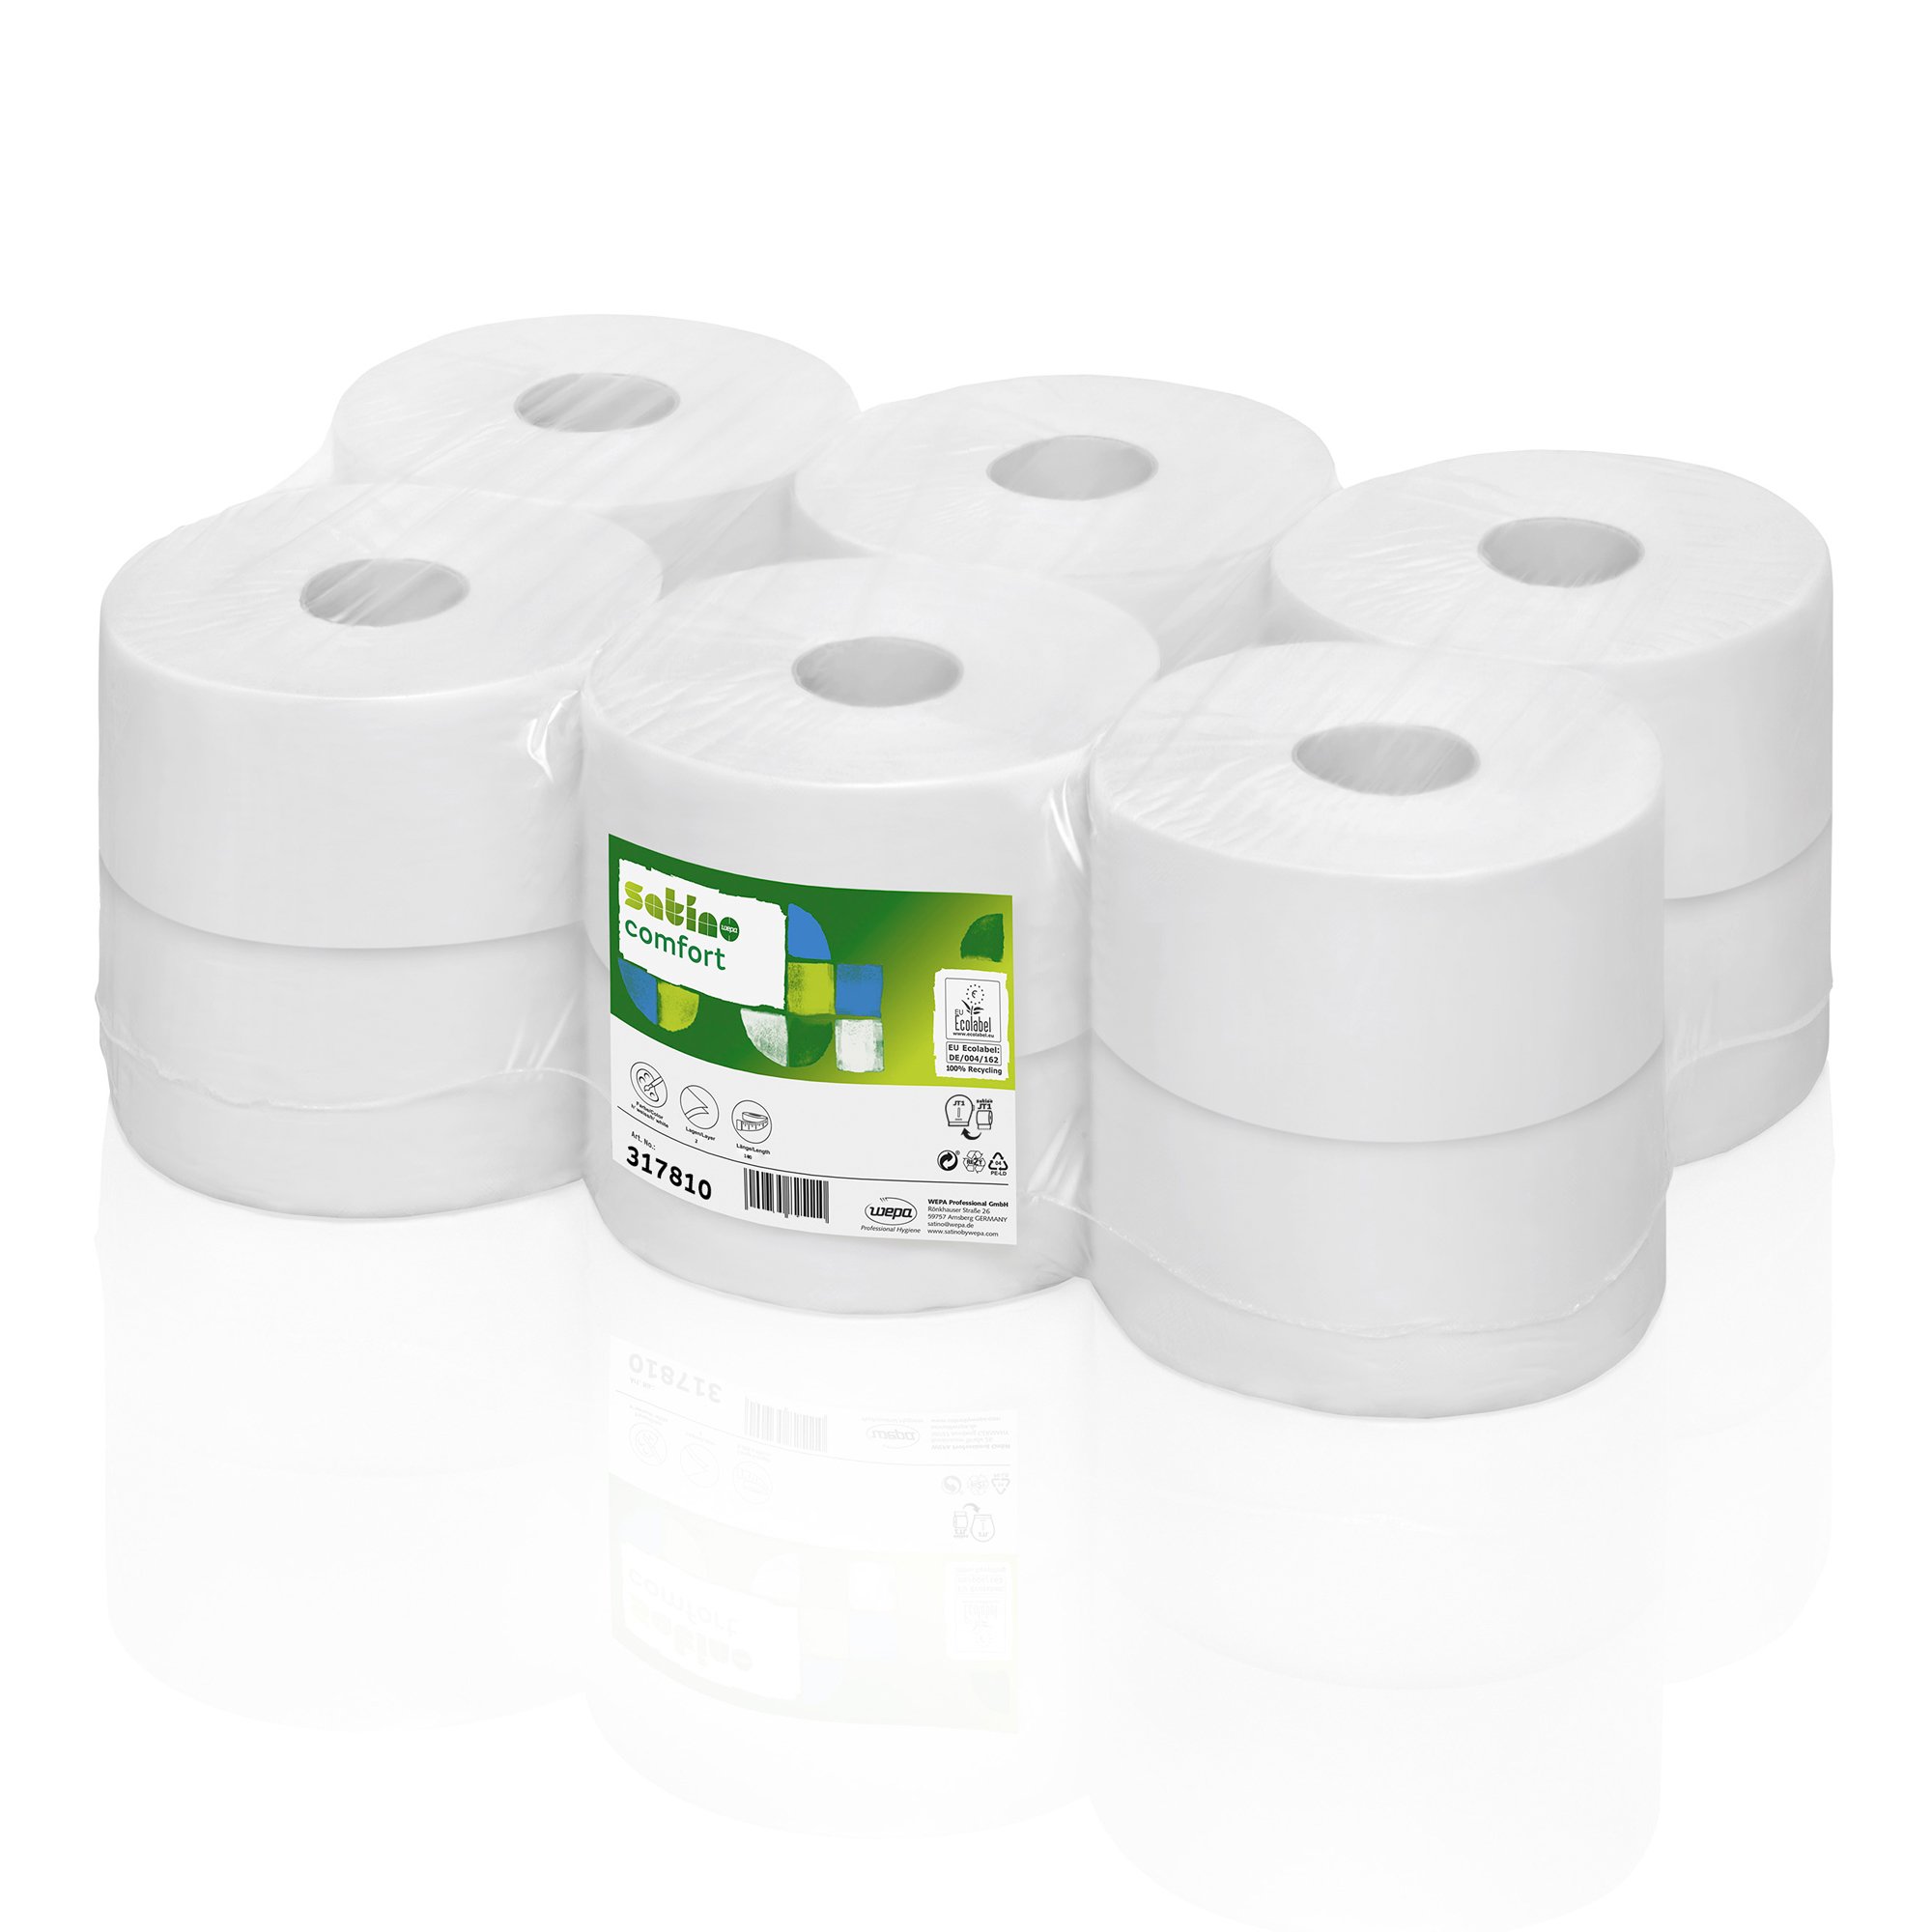 Satino by Wepa comfort Toilettenpapier Mini Jumbo hochweiß 2-lagig, 180 Meter 12 Rollen 317810_1